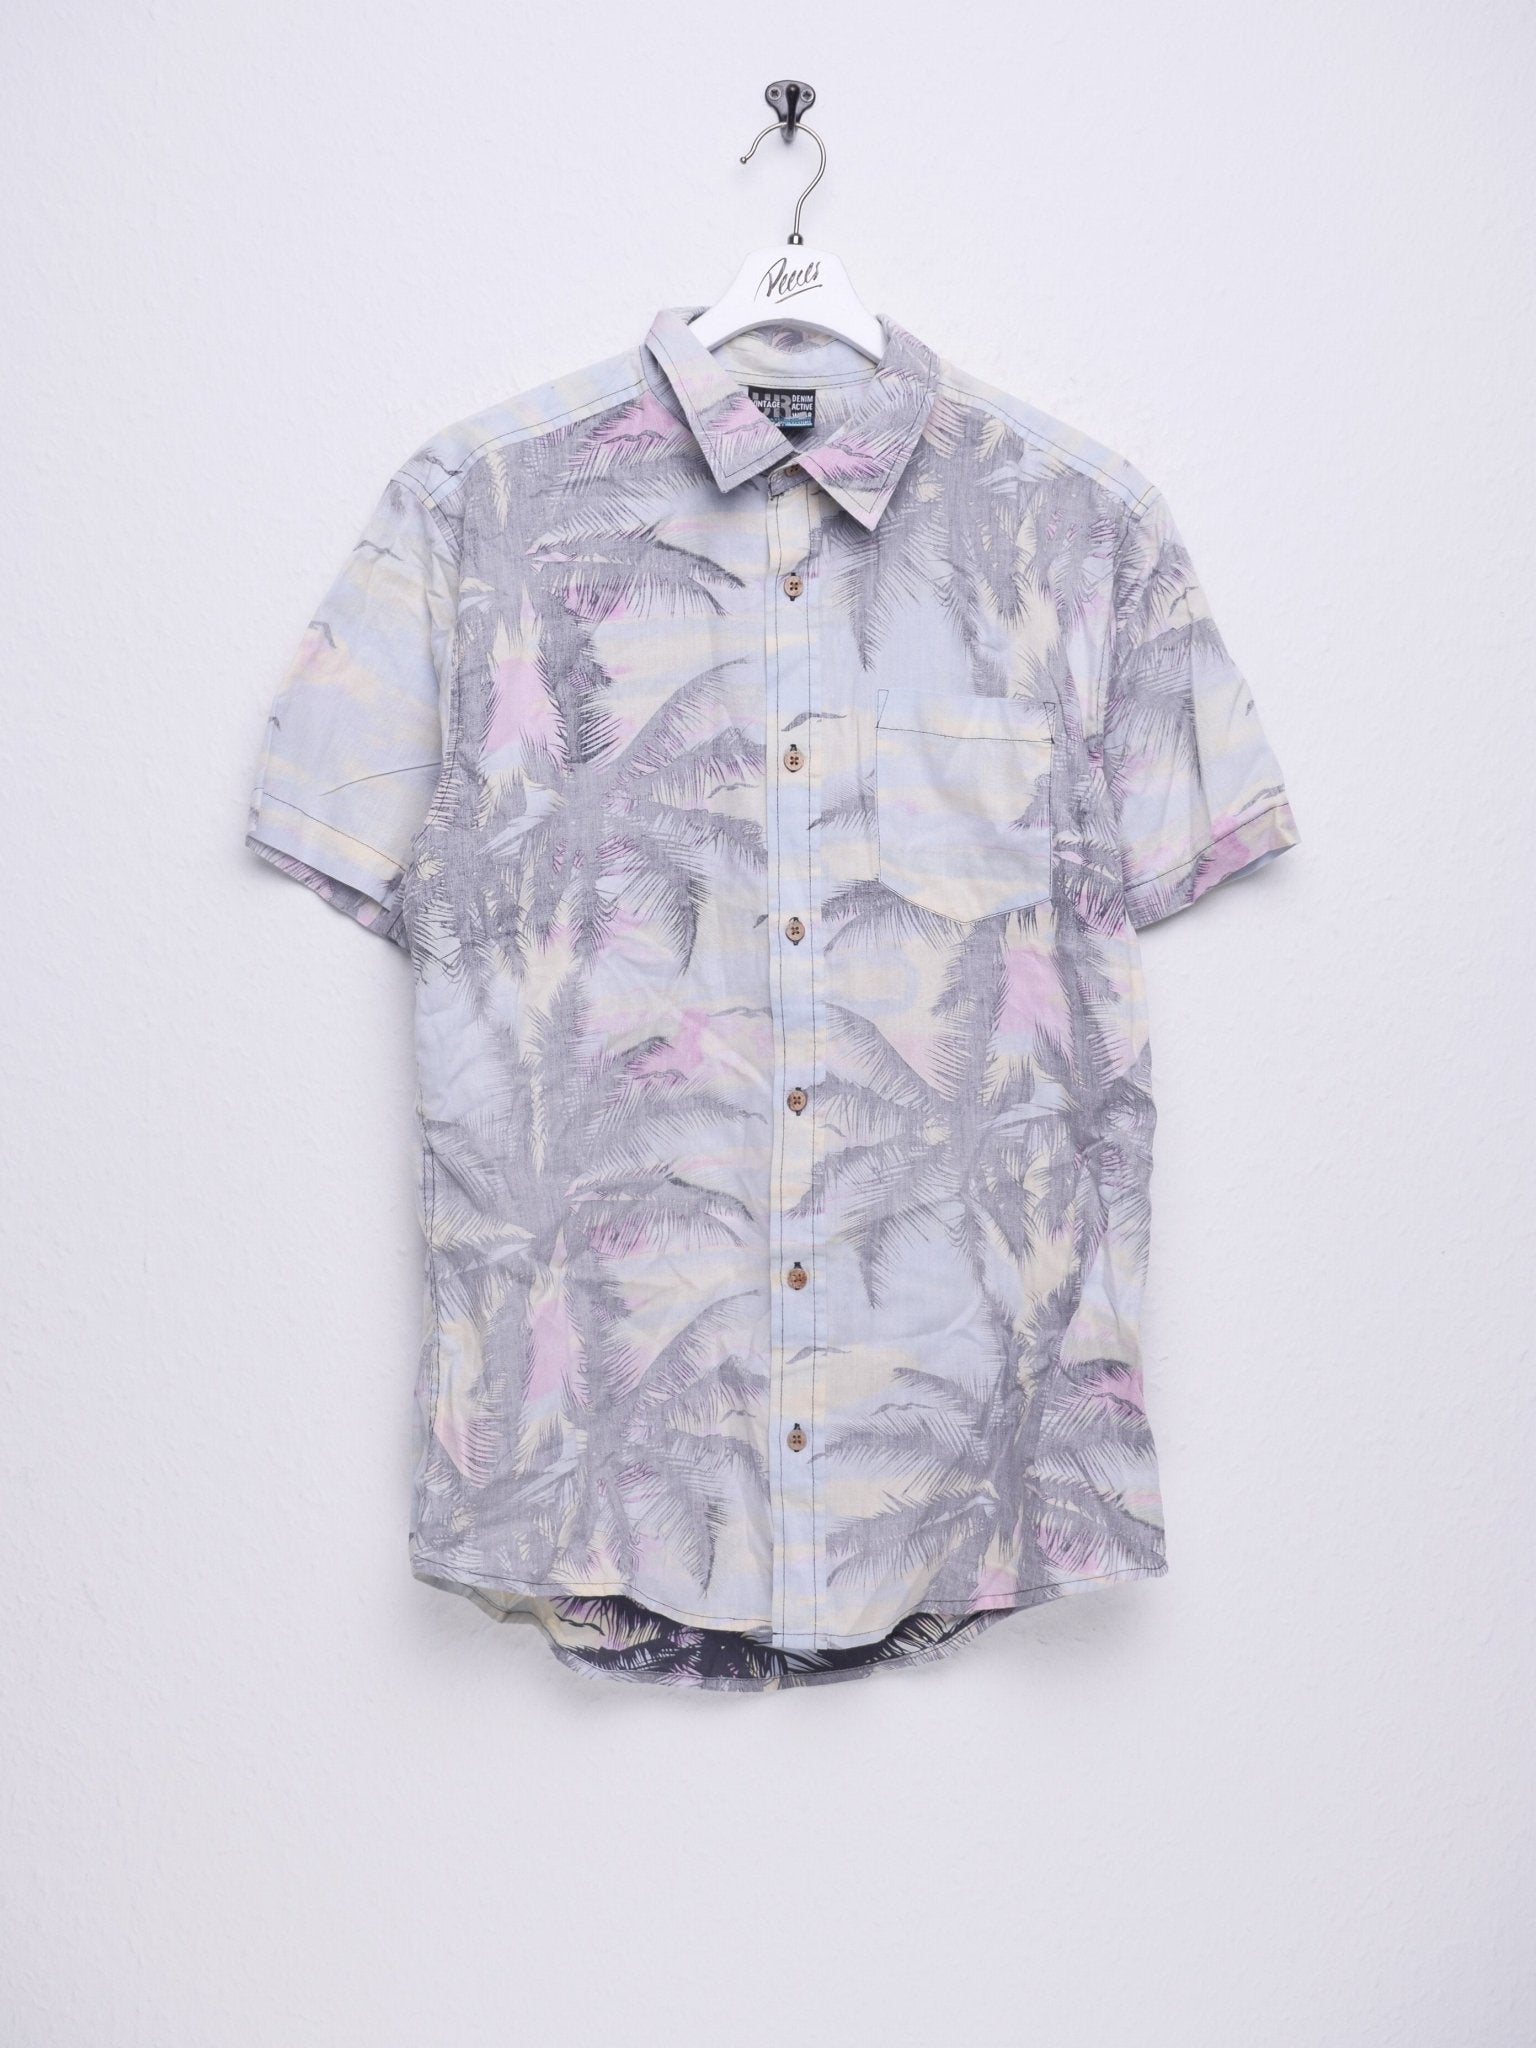 'Hawaii' printed Pattern multicolored S/S Hemd - Peeces